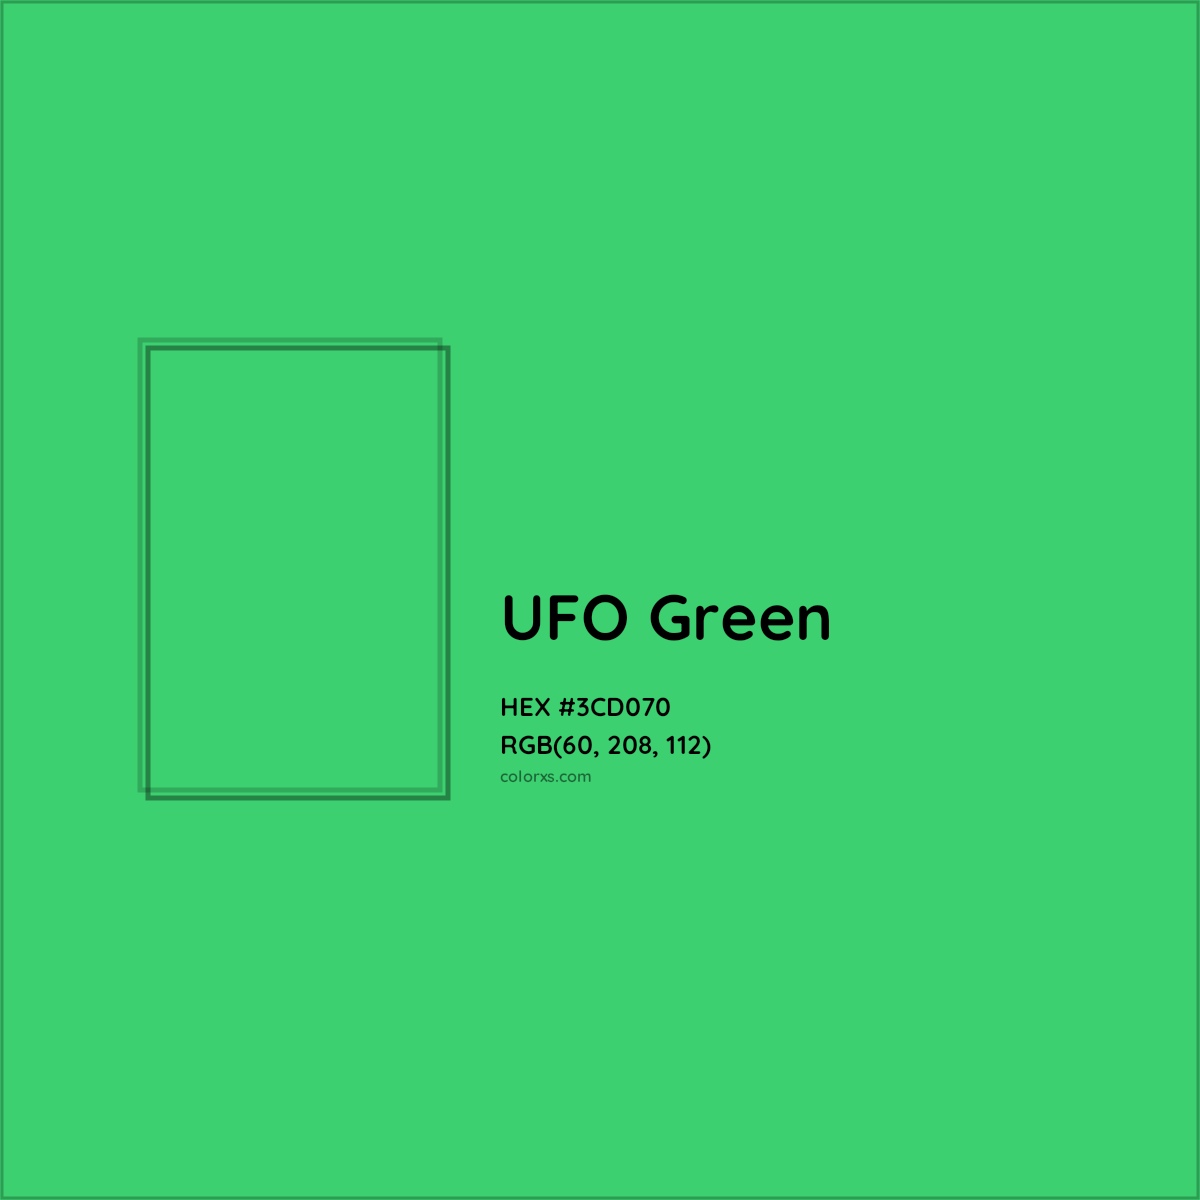 HEX #3CD070 UFO Green Color - Color Code